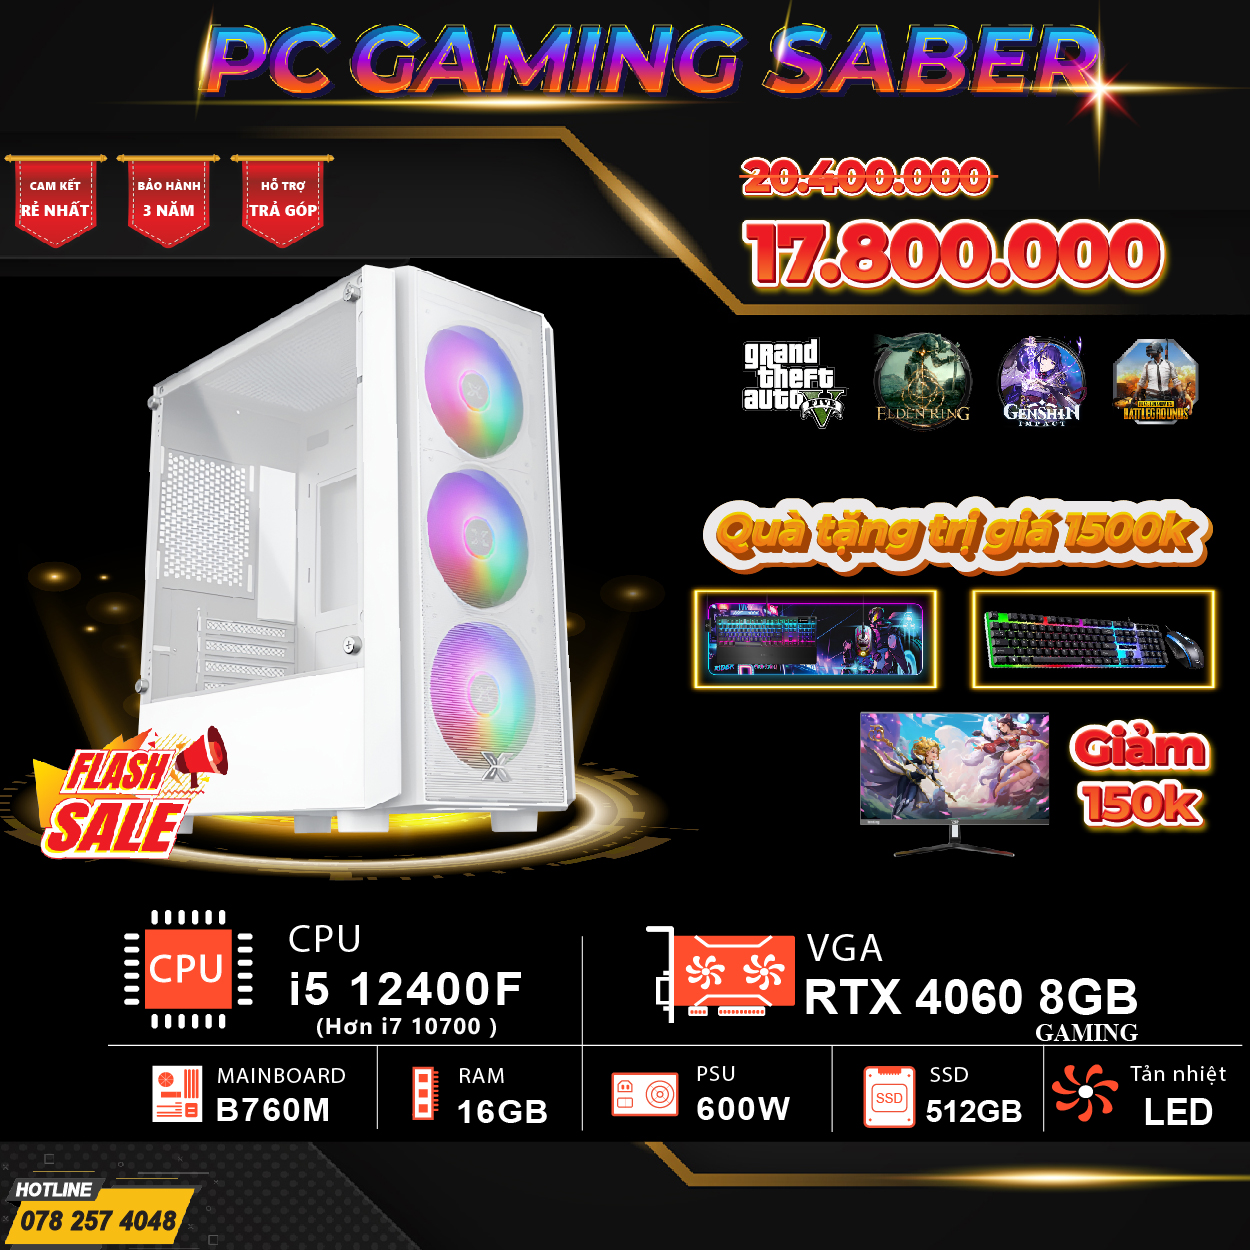 PC GAMING SABER - FULL NEW 100%